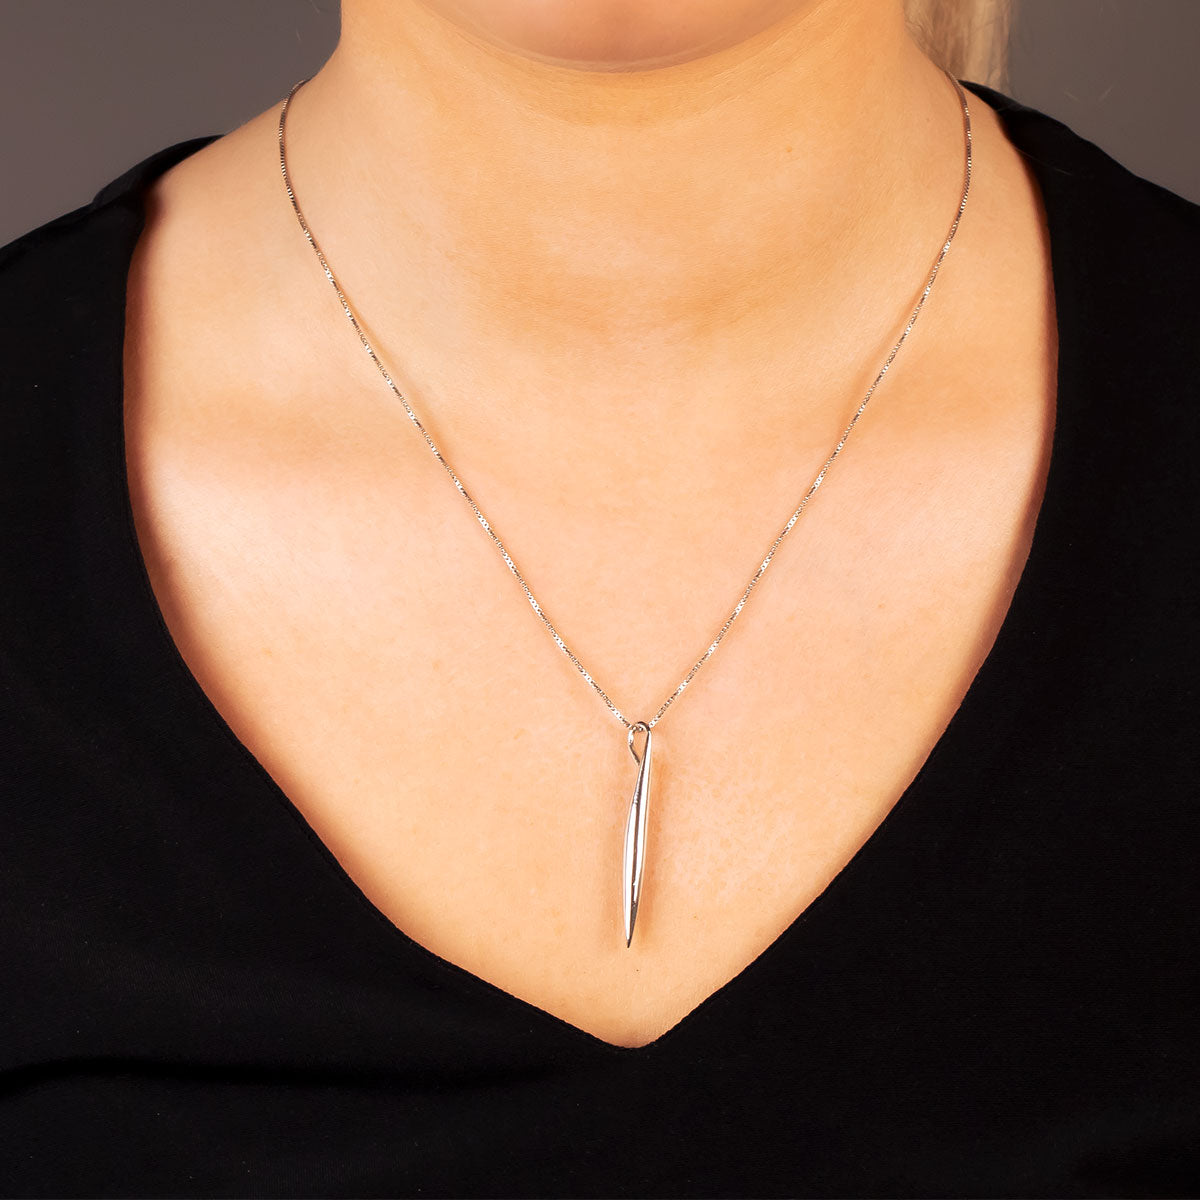 Silver Needle Pendant